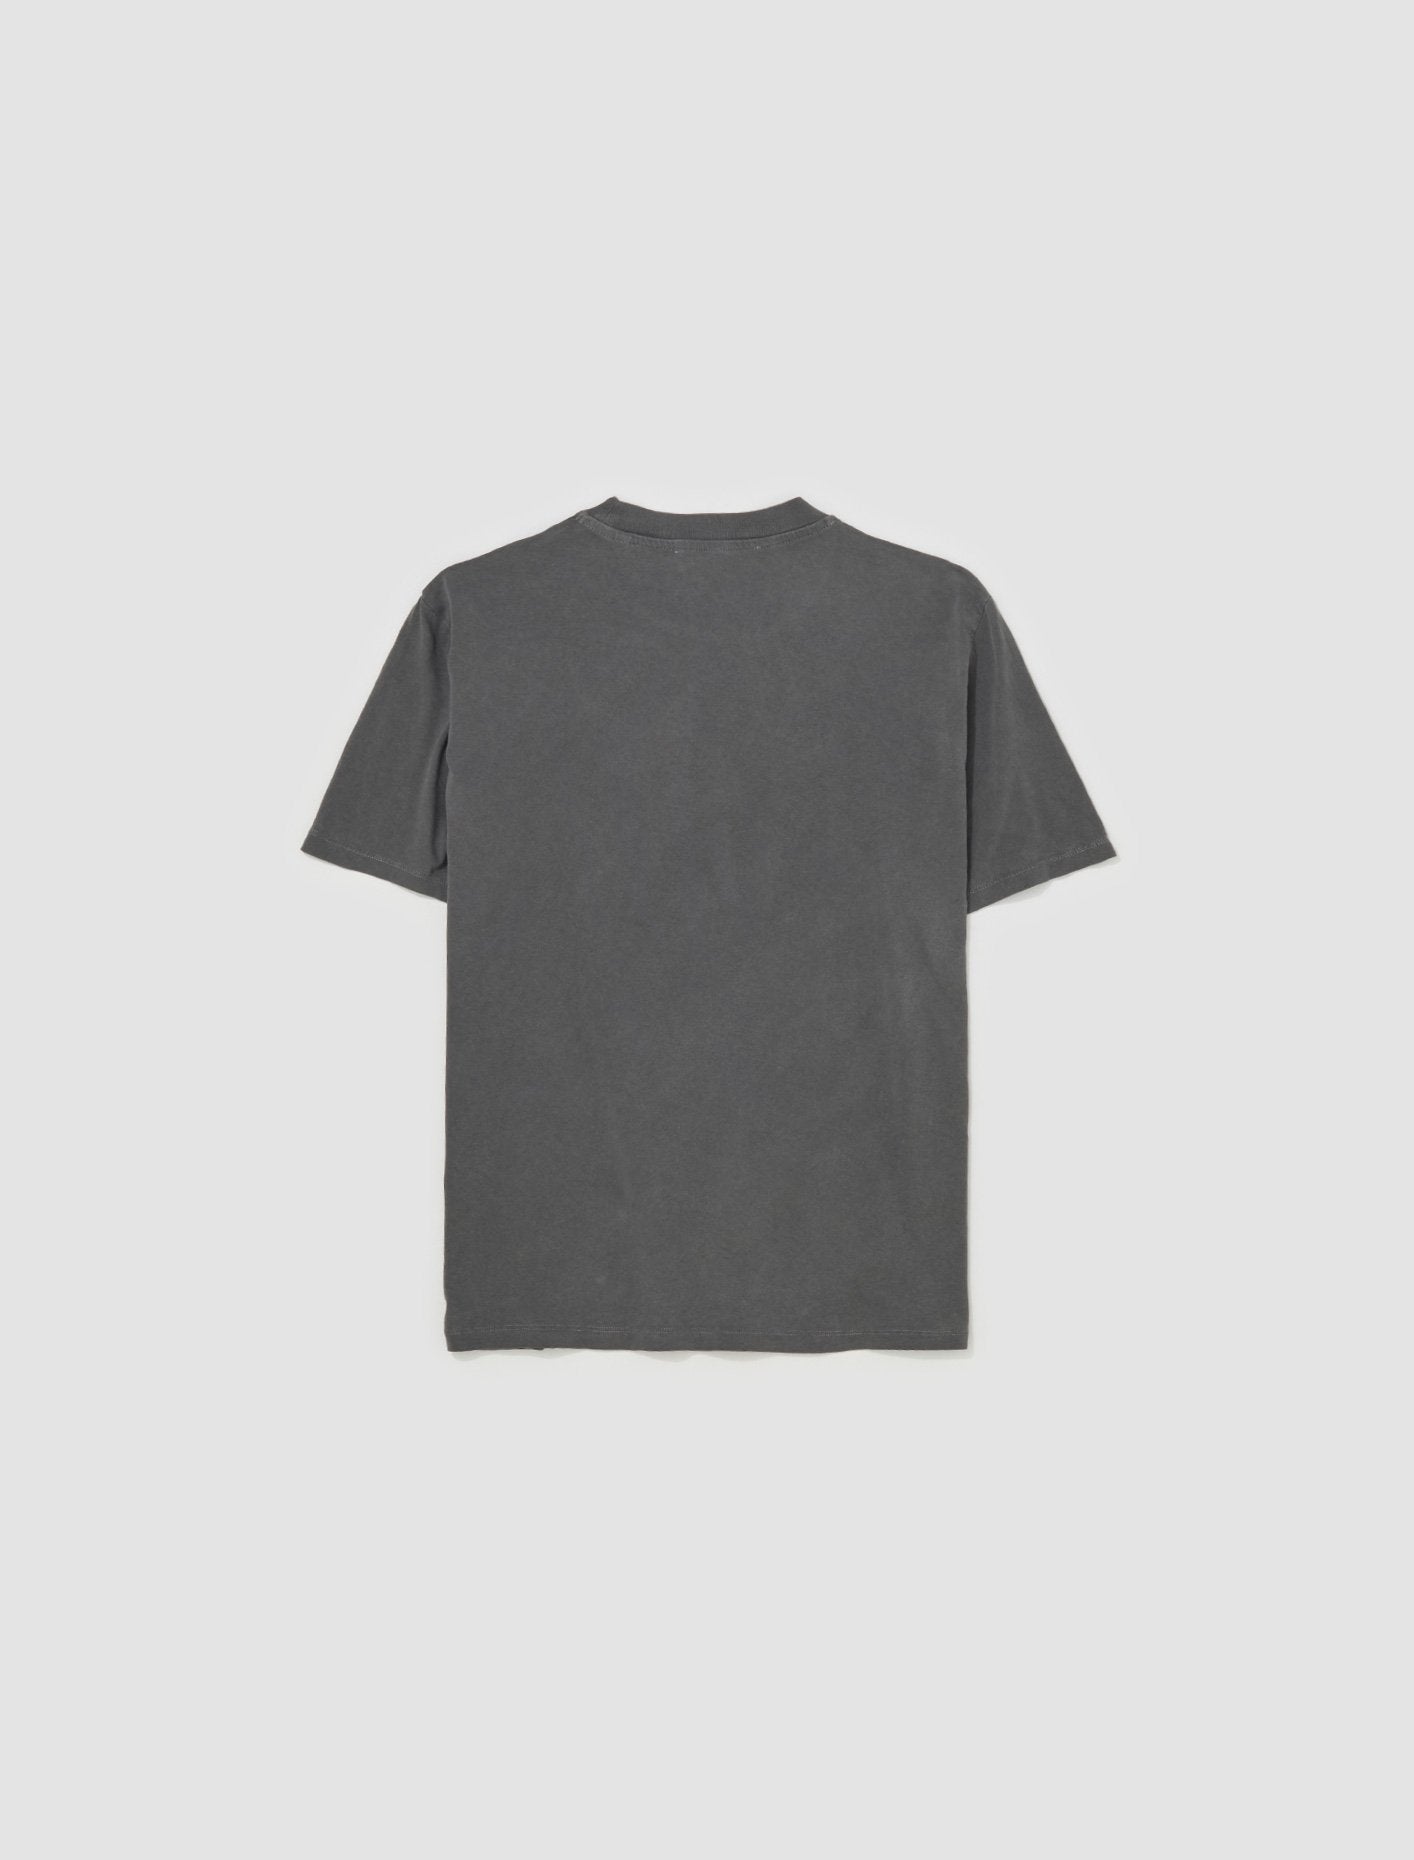 Box T-Shirt in Worn Black